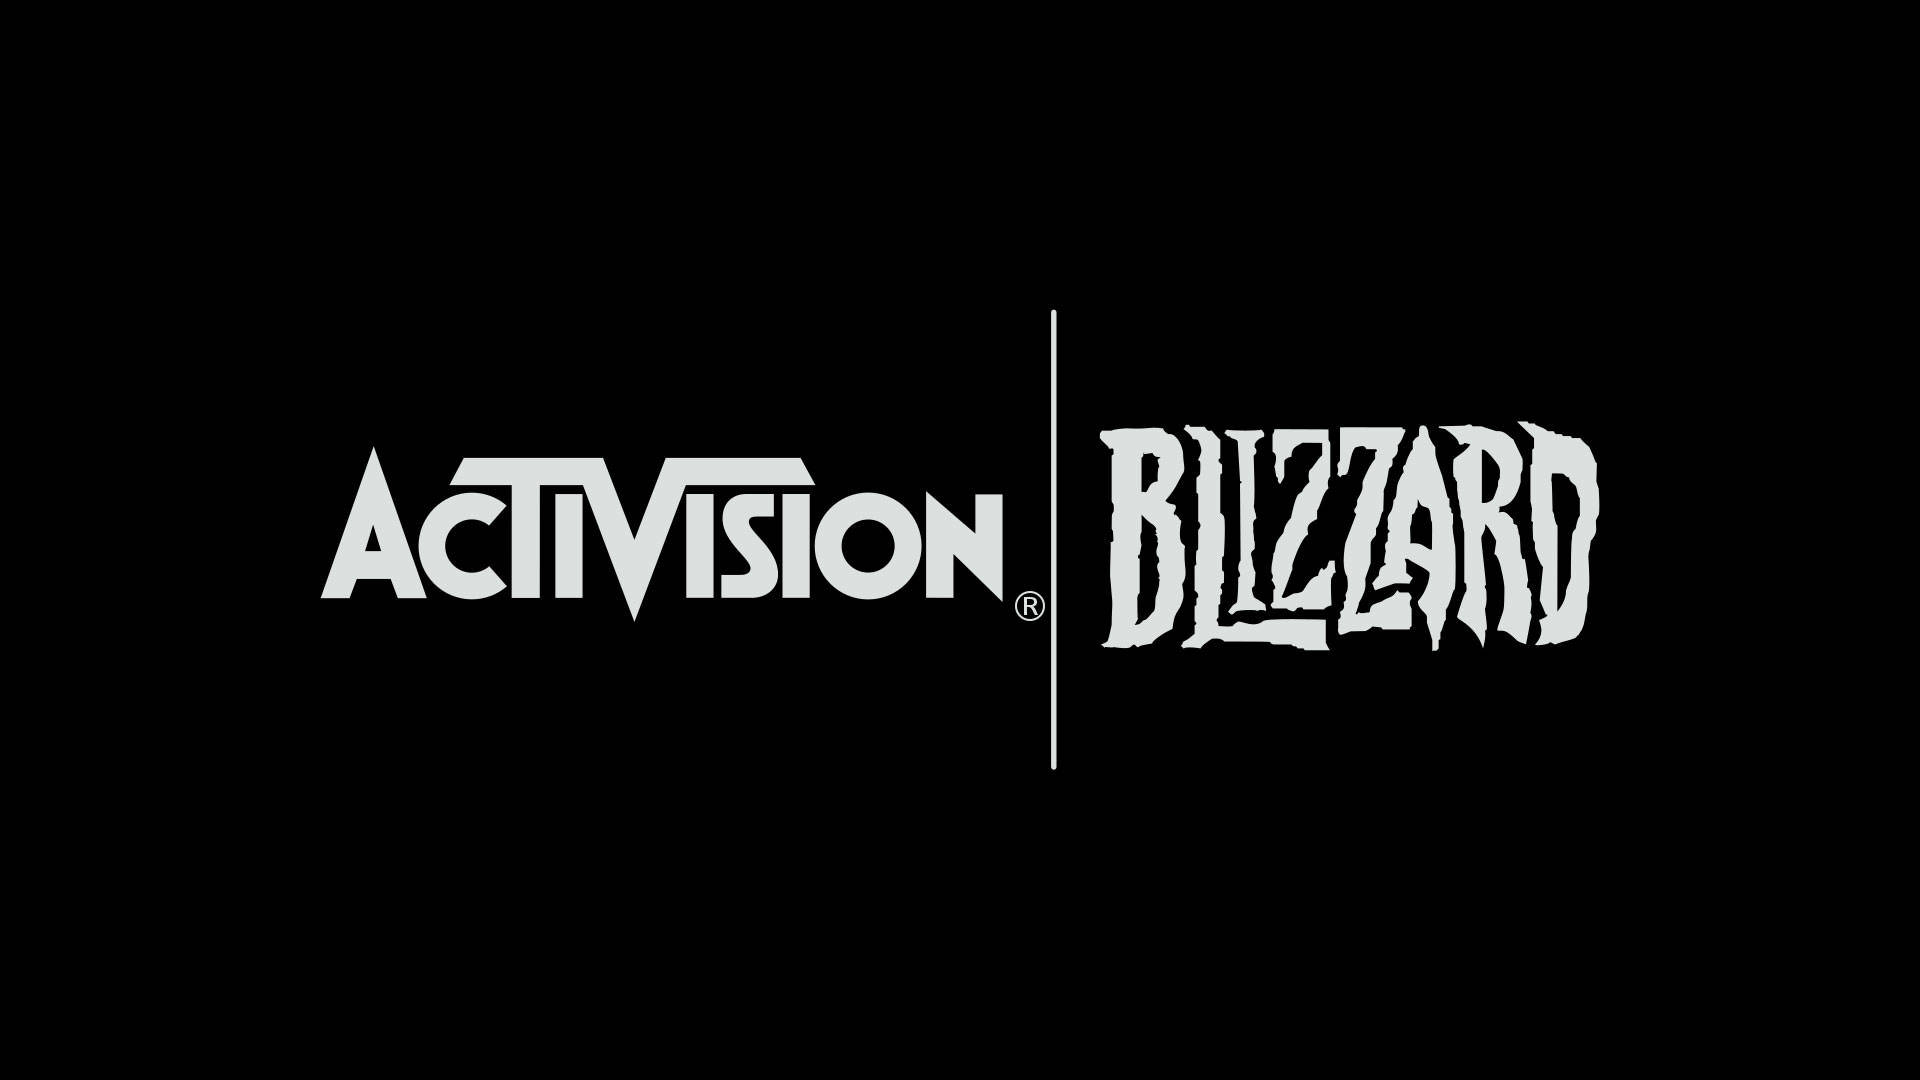 Саудовская Аравия купила акции Electronic Arts, Activision Blizzard и Take-Two Interactive на сумму $3,3 млрд